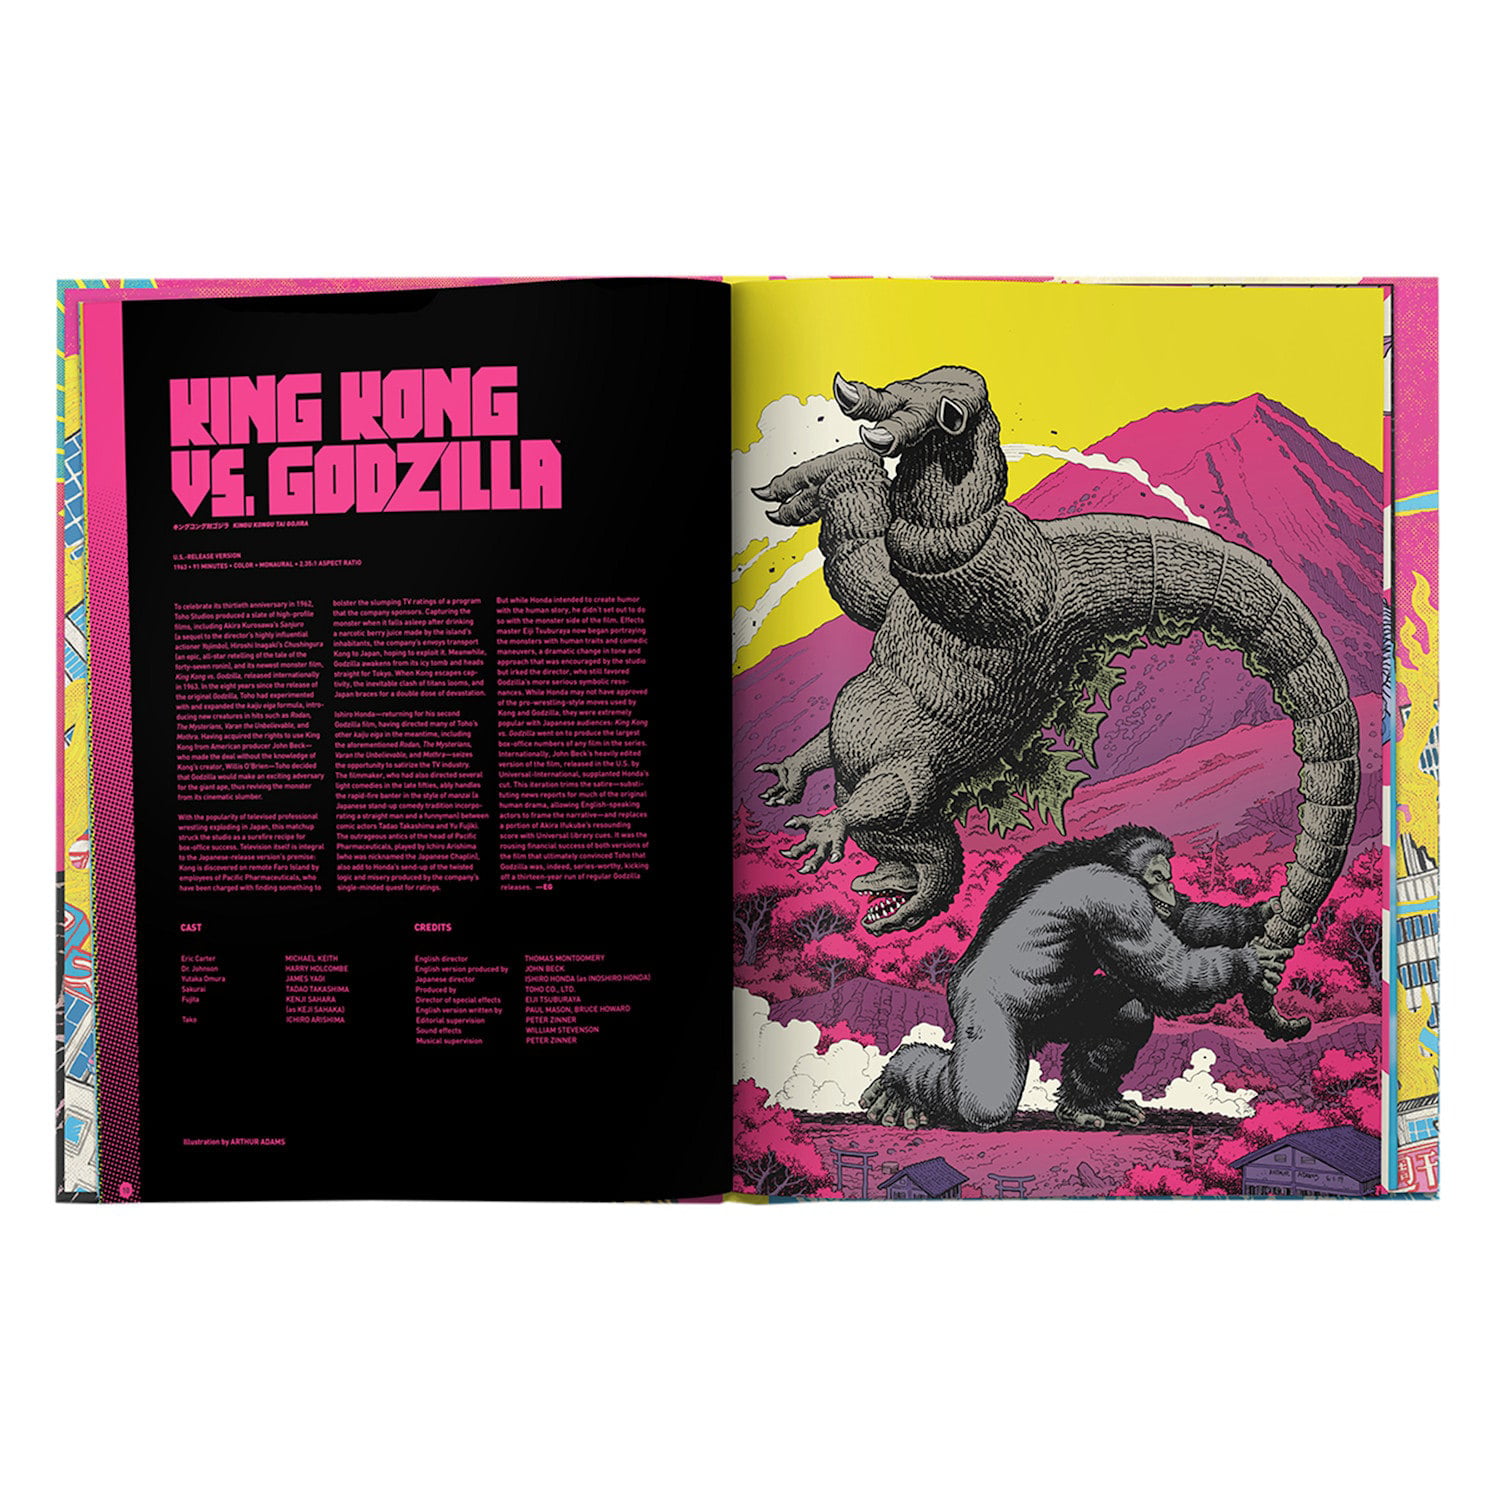 Godzilla: The Showa-Era Films, 1954-1975 (Criterion Collection 